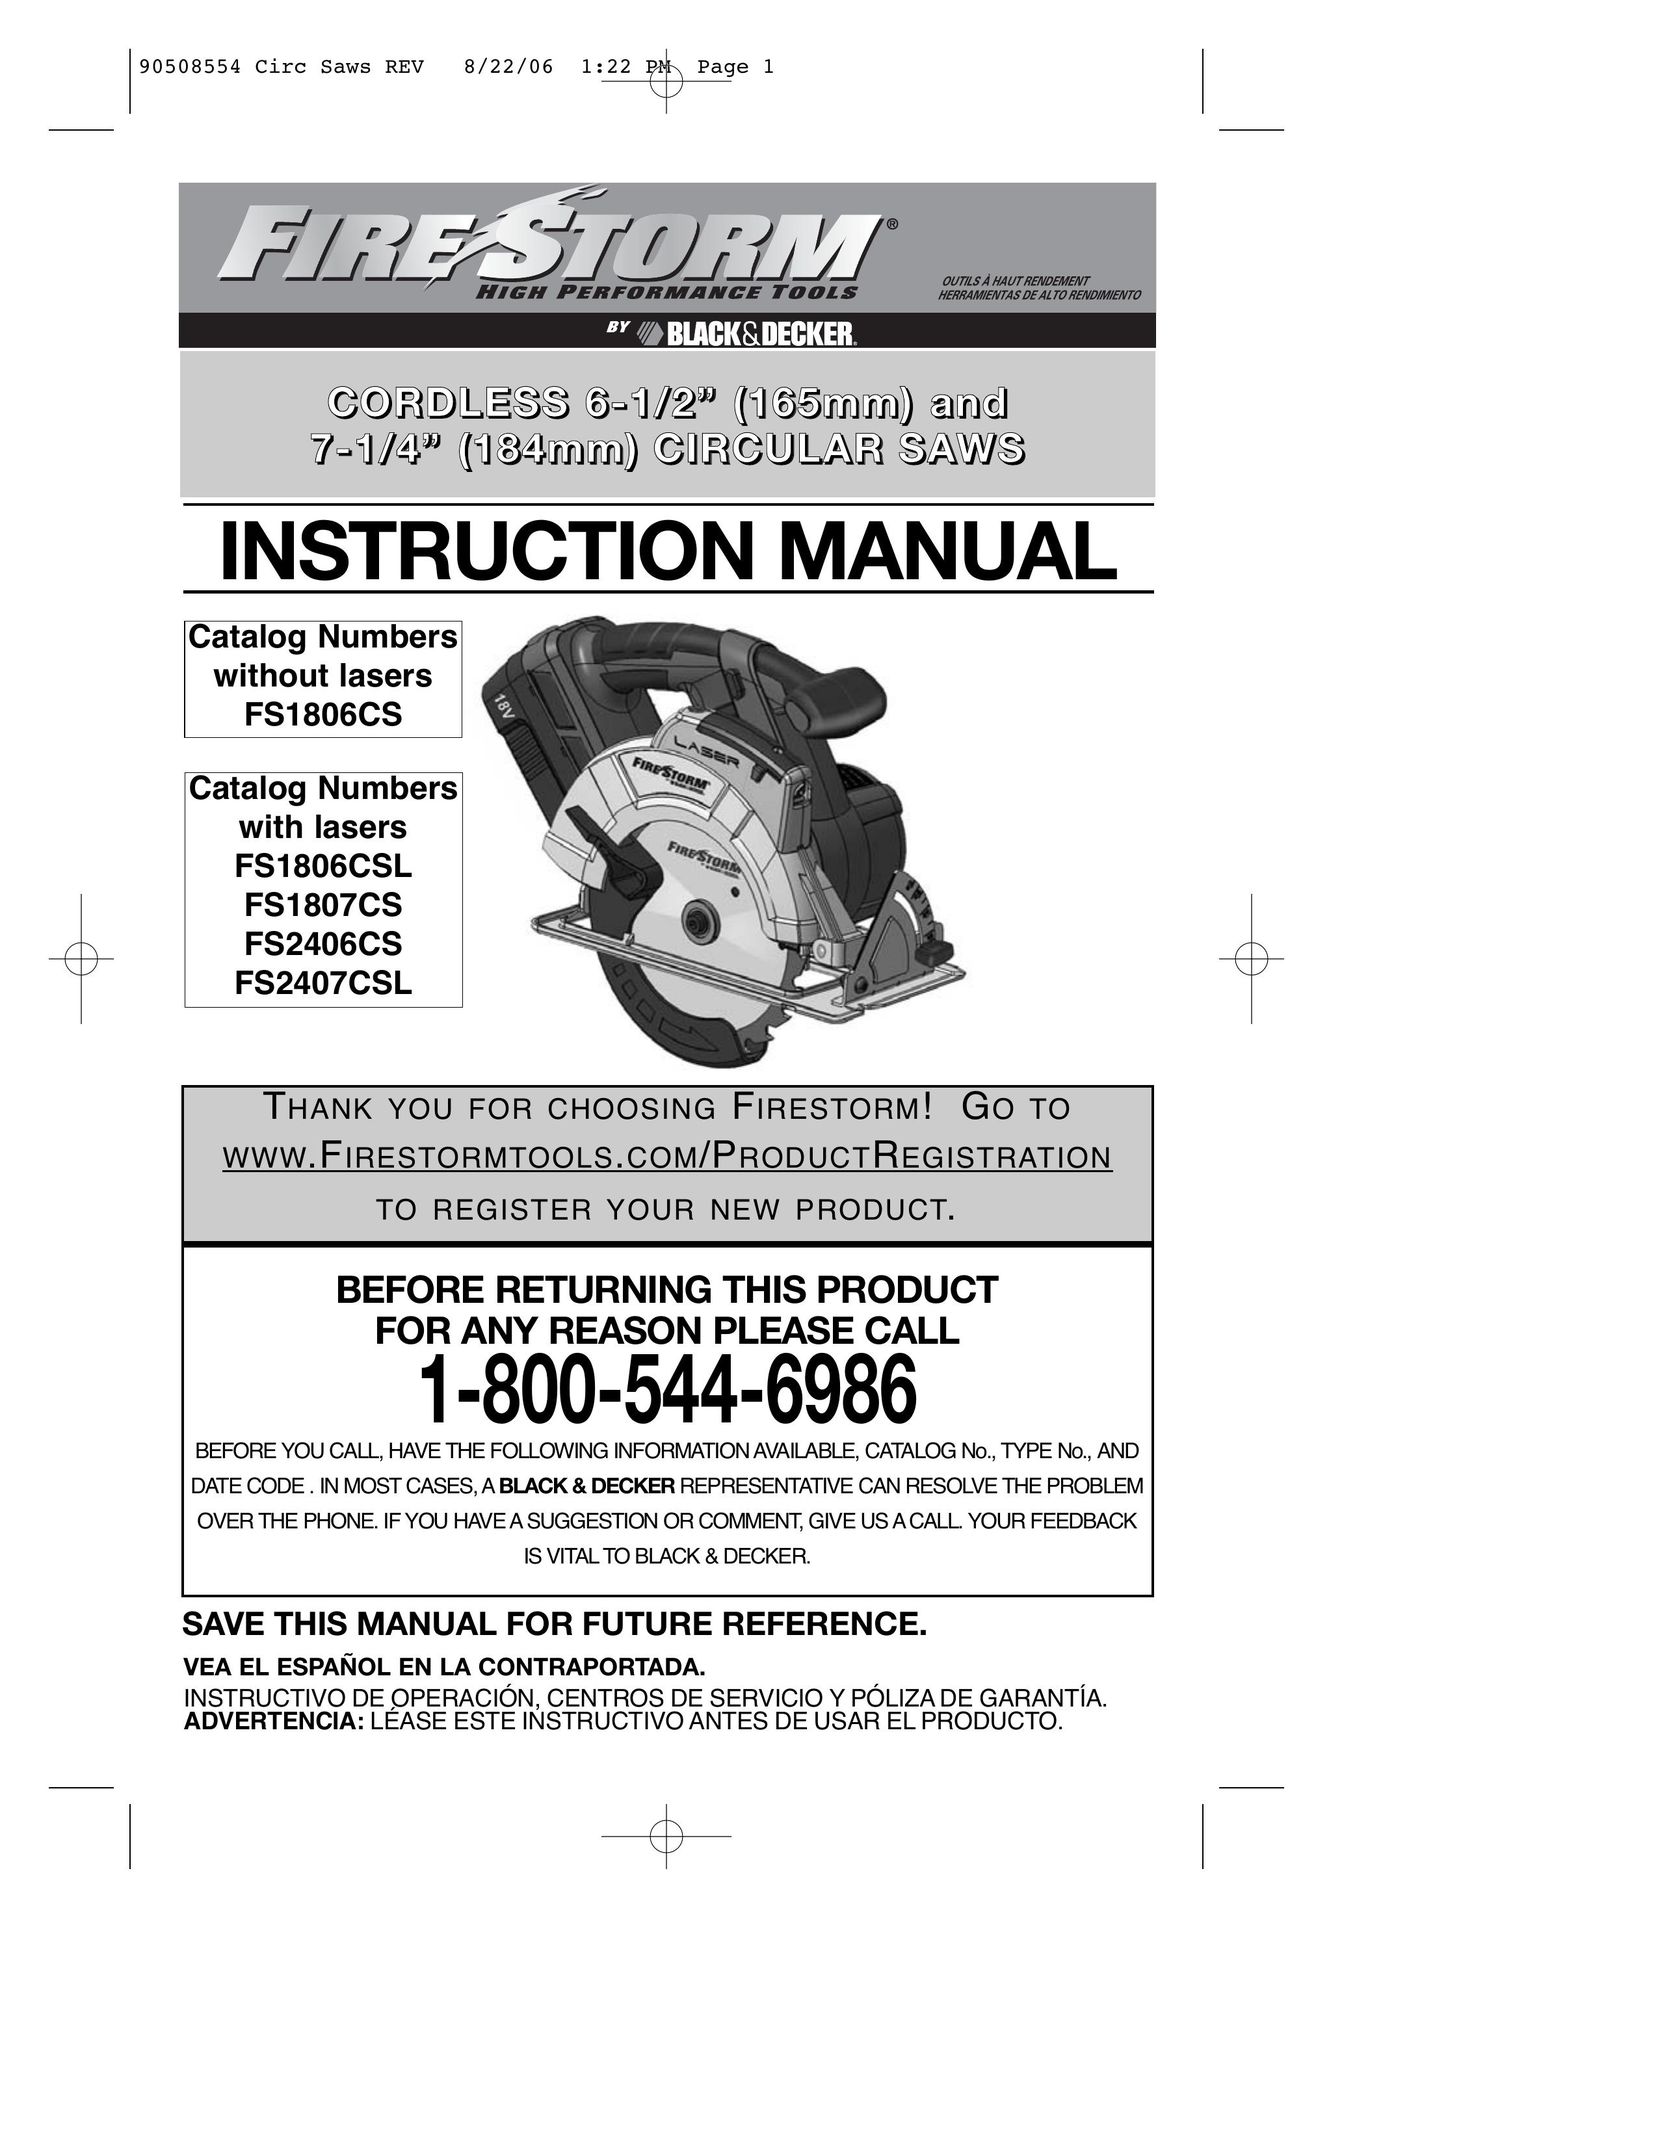 Black & Decker FS1806CS Cordless Saw User Manual